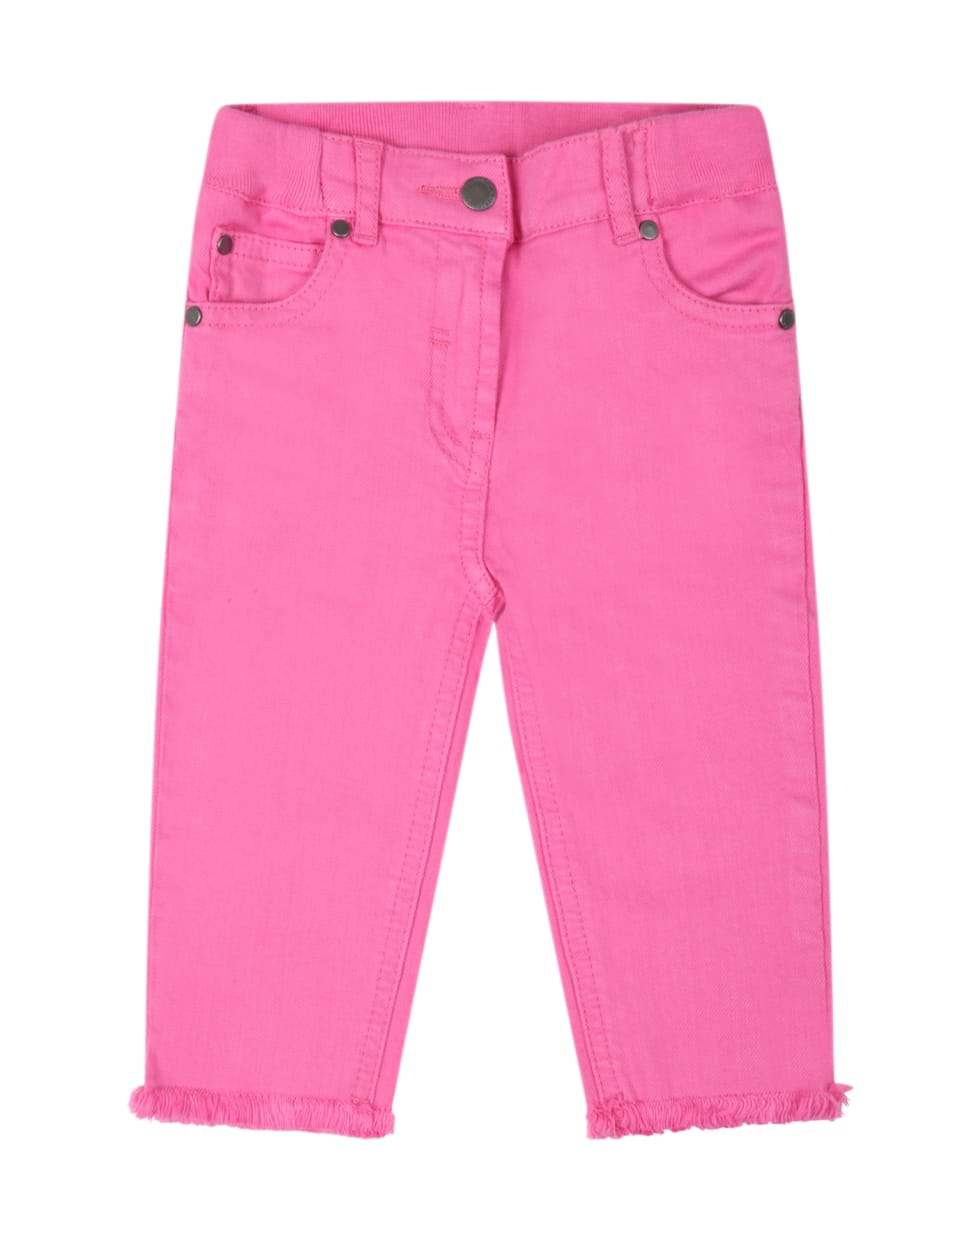 Stella McCartney Kids Fuchsia Jeans For Baby Girl With Logo Patch - Fuchsia